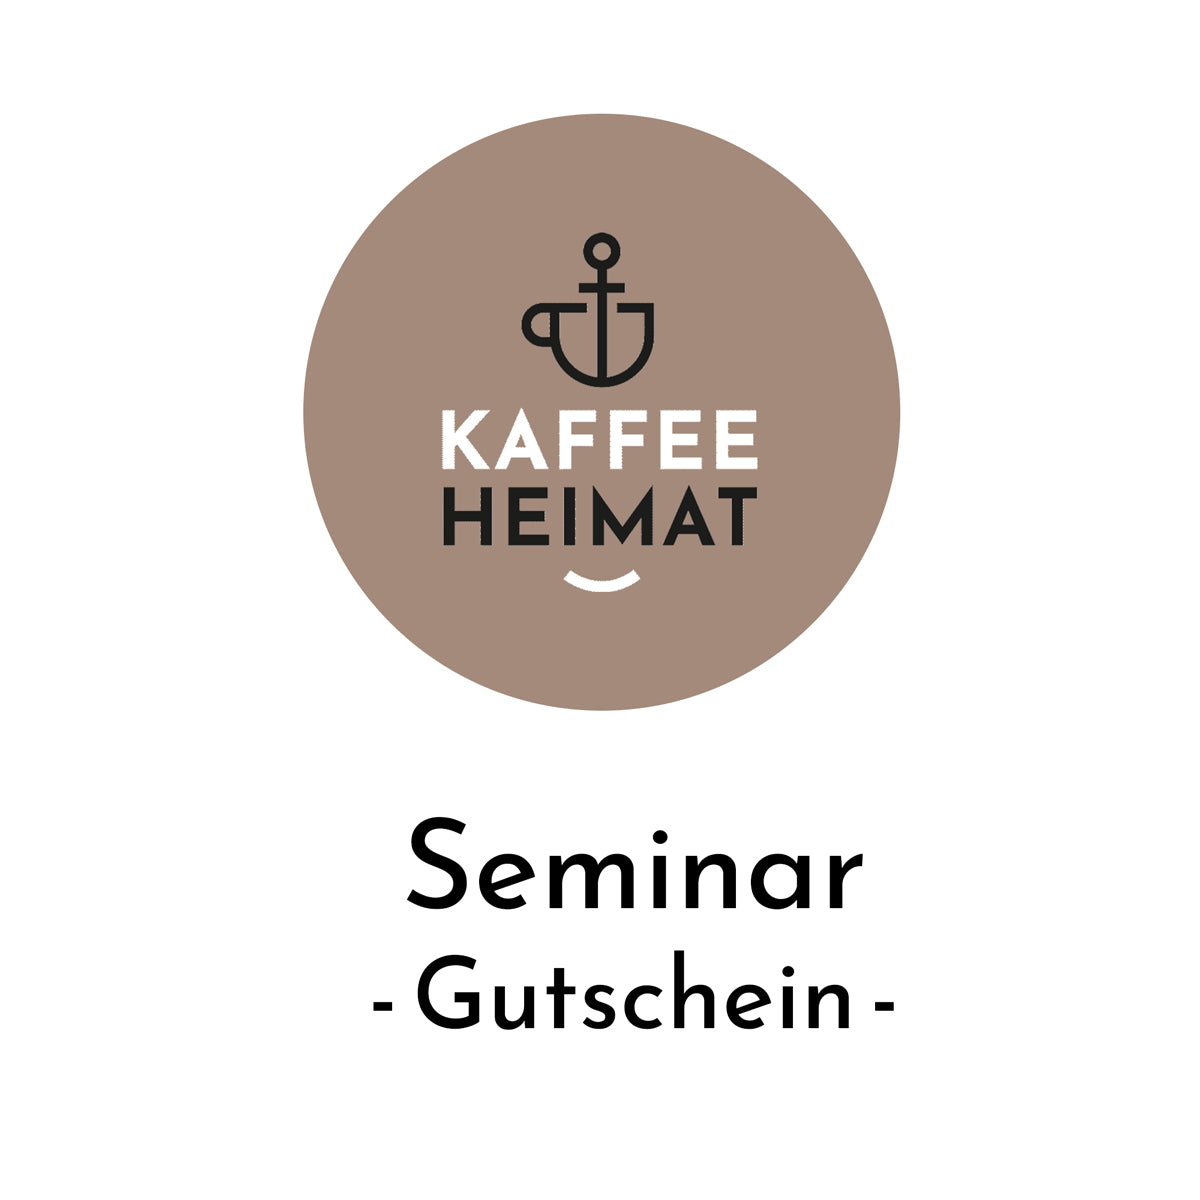 Seminar-Gutschein-Kaffeeheimat